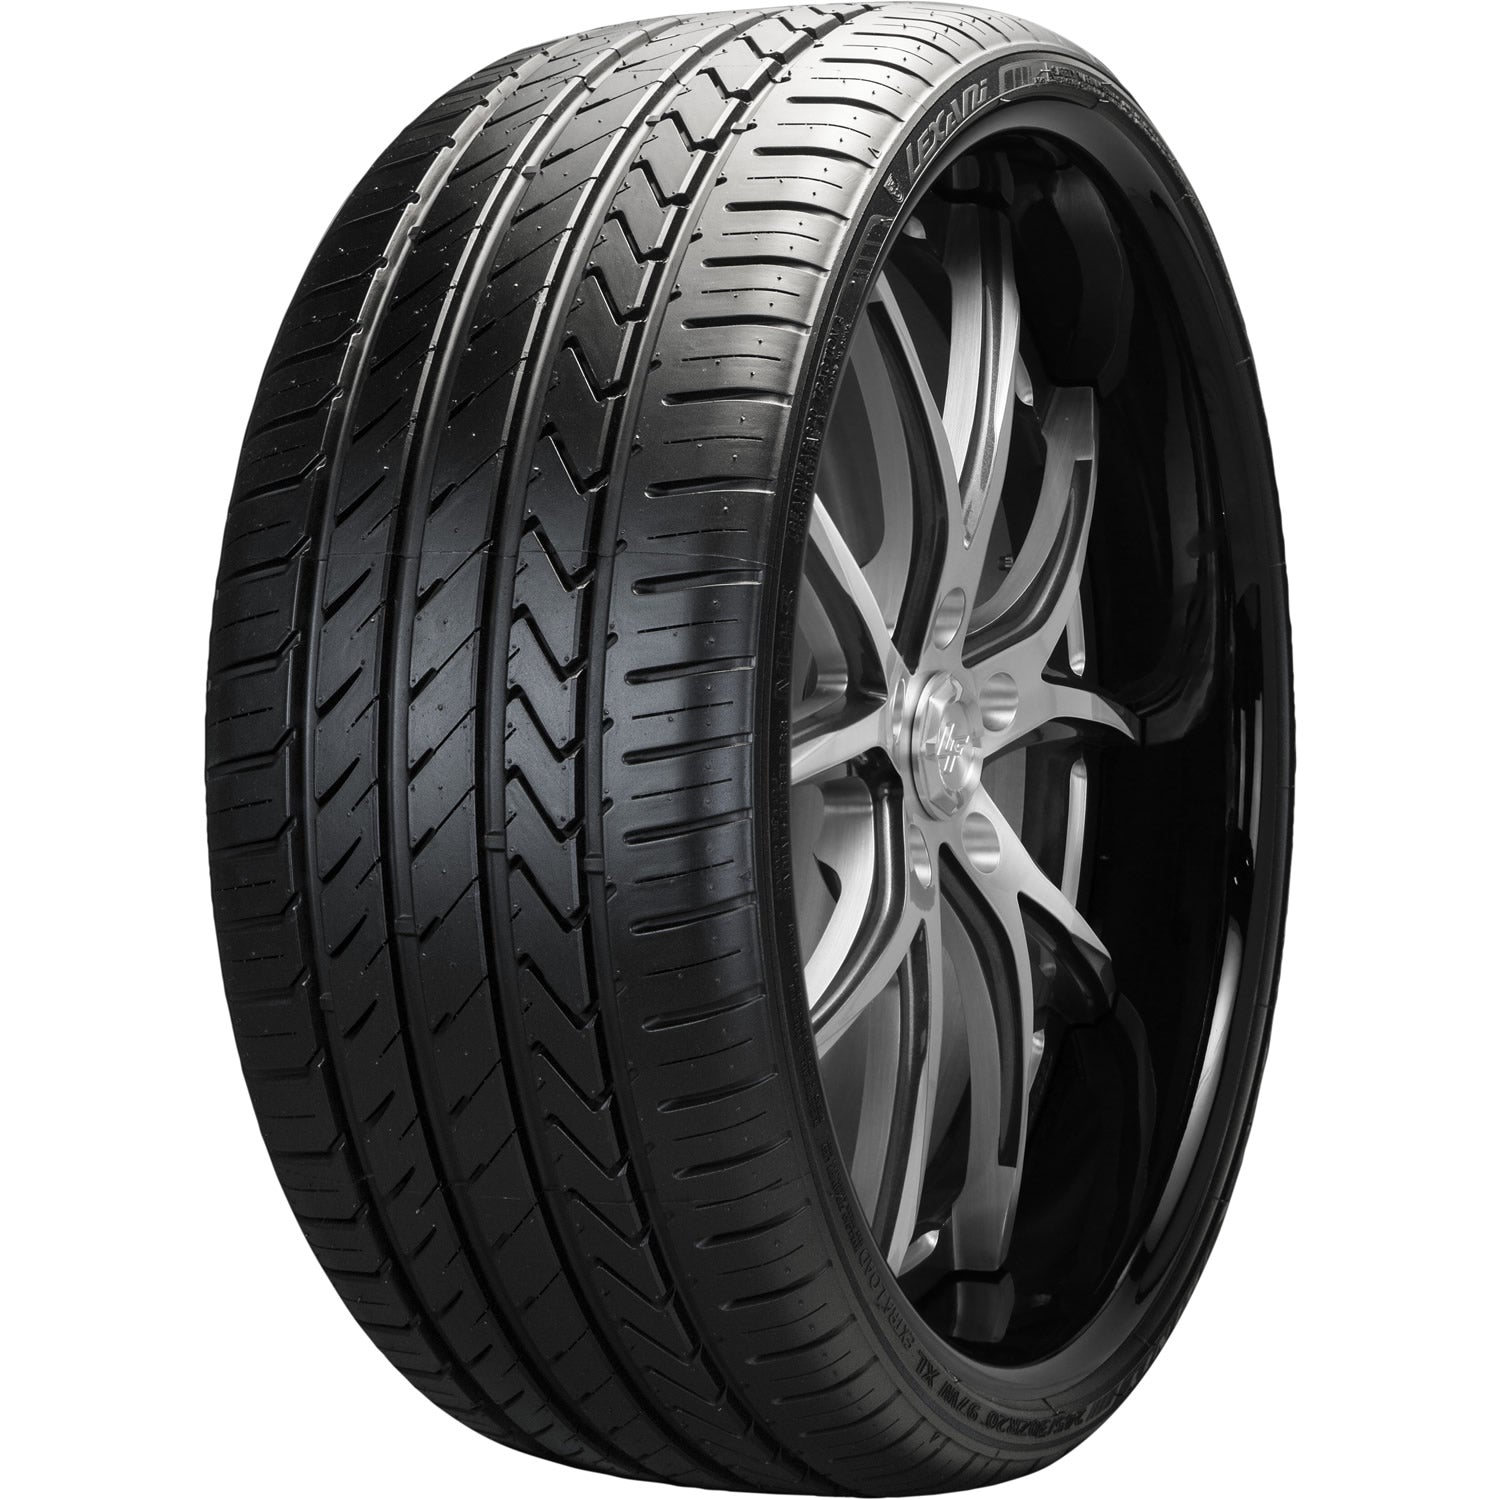 LEXANI LX-TWENTY 255/25ZR24 (28.7X11.5R 24) Tires